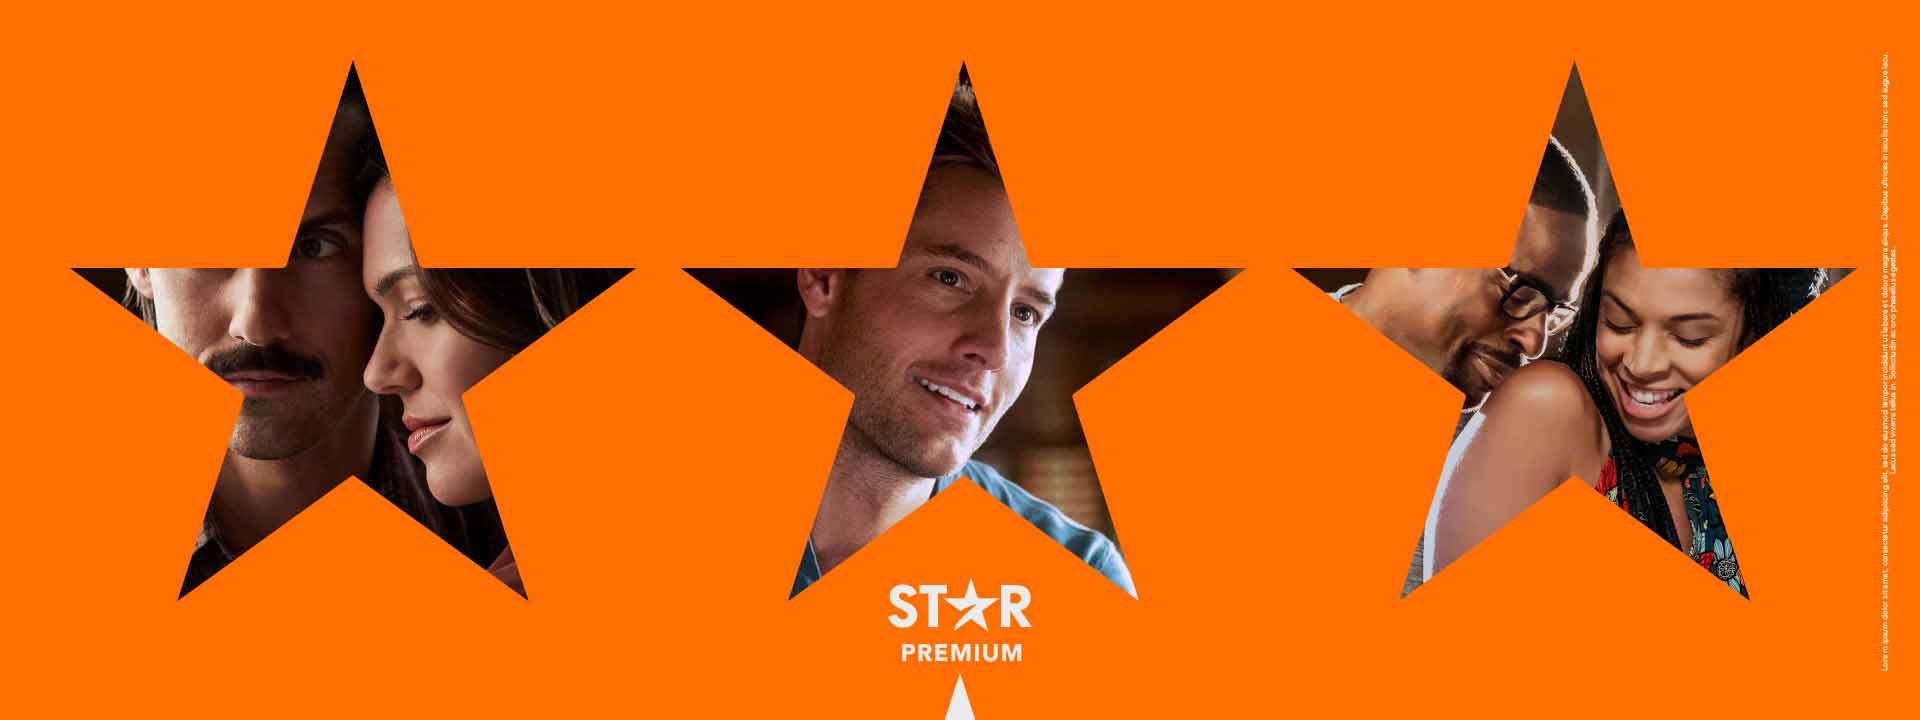 Star Premium. Pay-TV Branding.